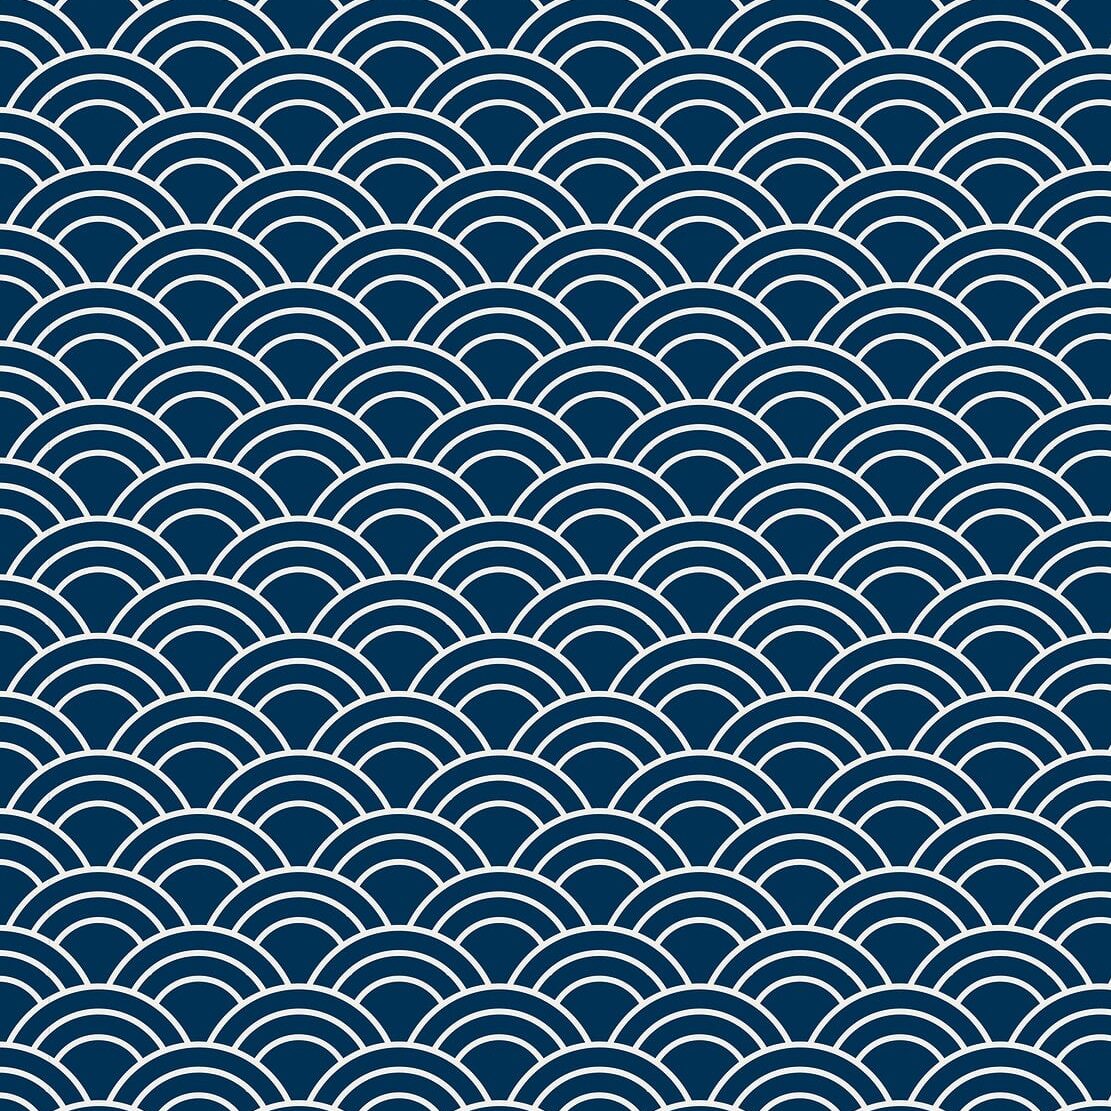 motif seigahia bleu foncé et blanc